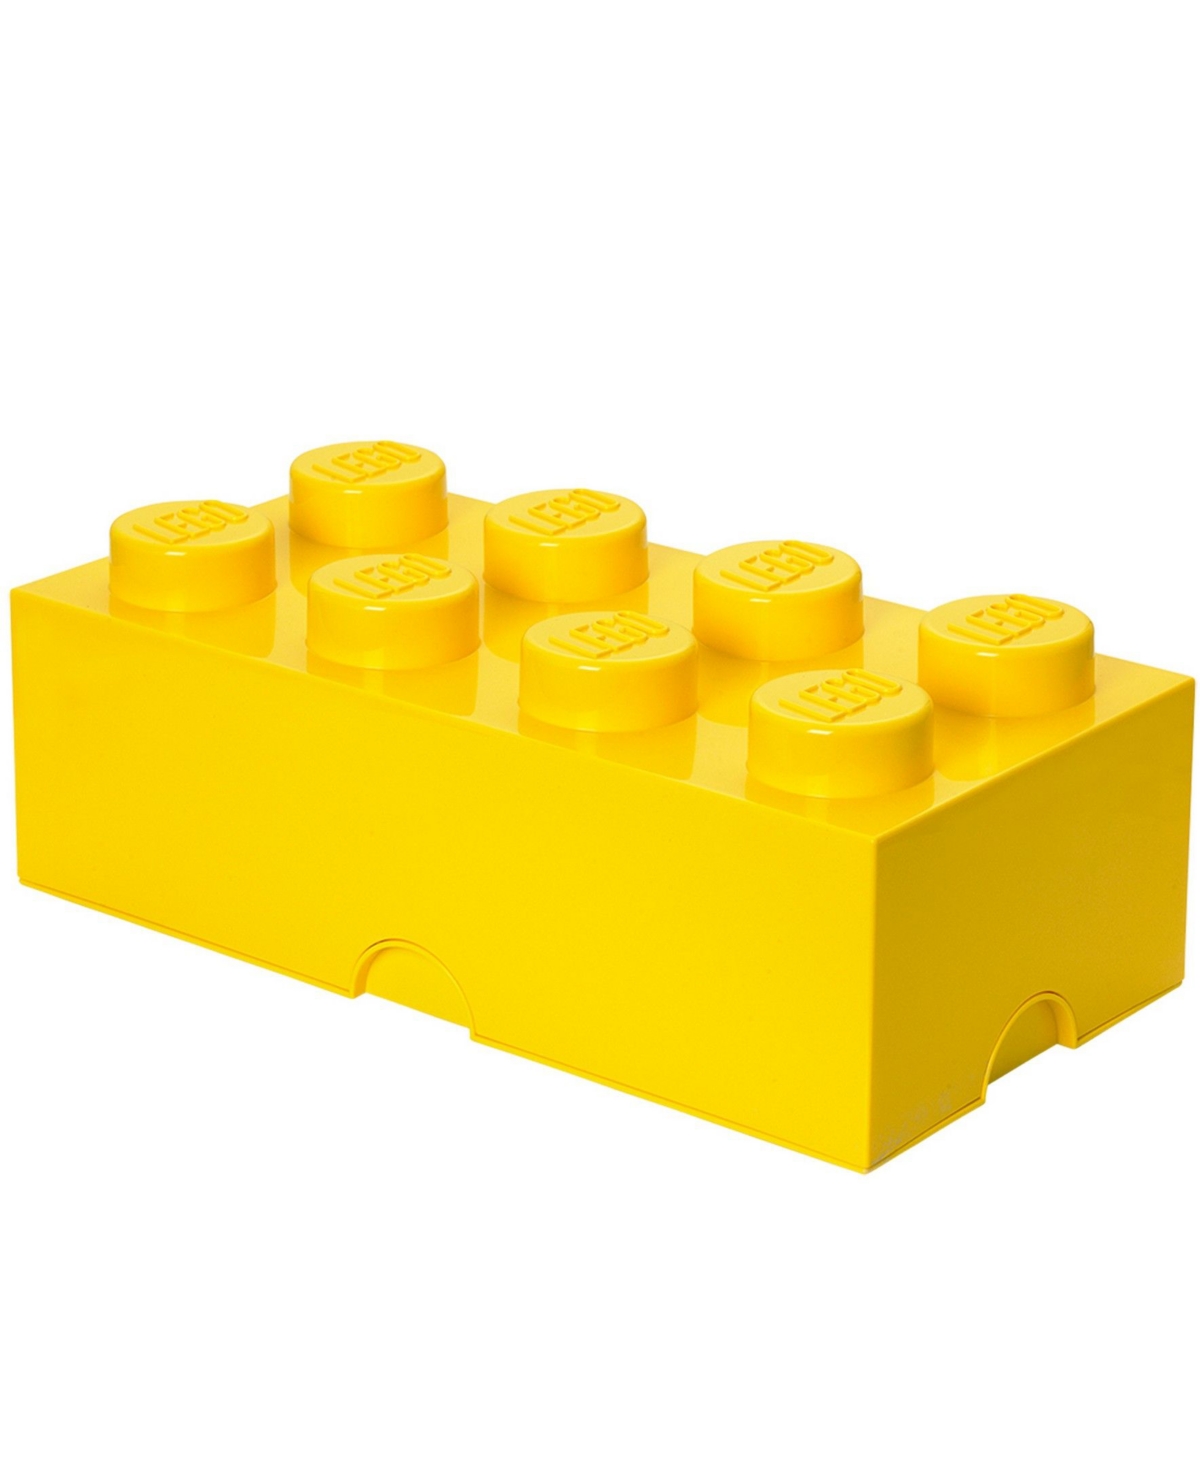 Room Copenhagen Lego Storage Brick 8 In Multi